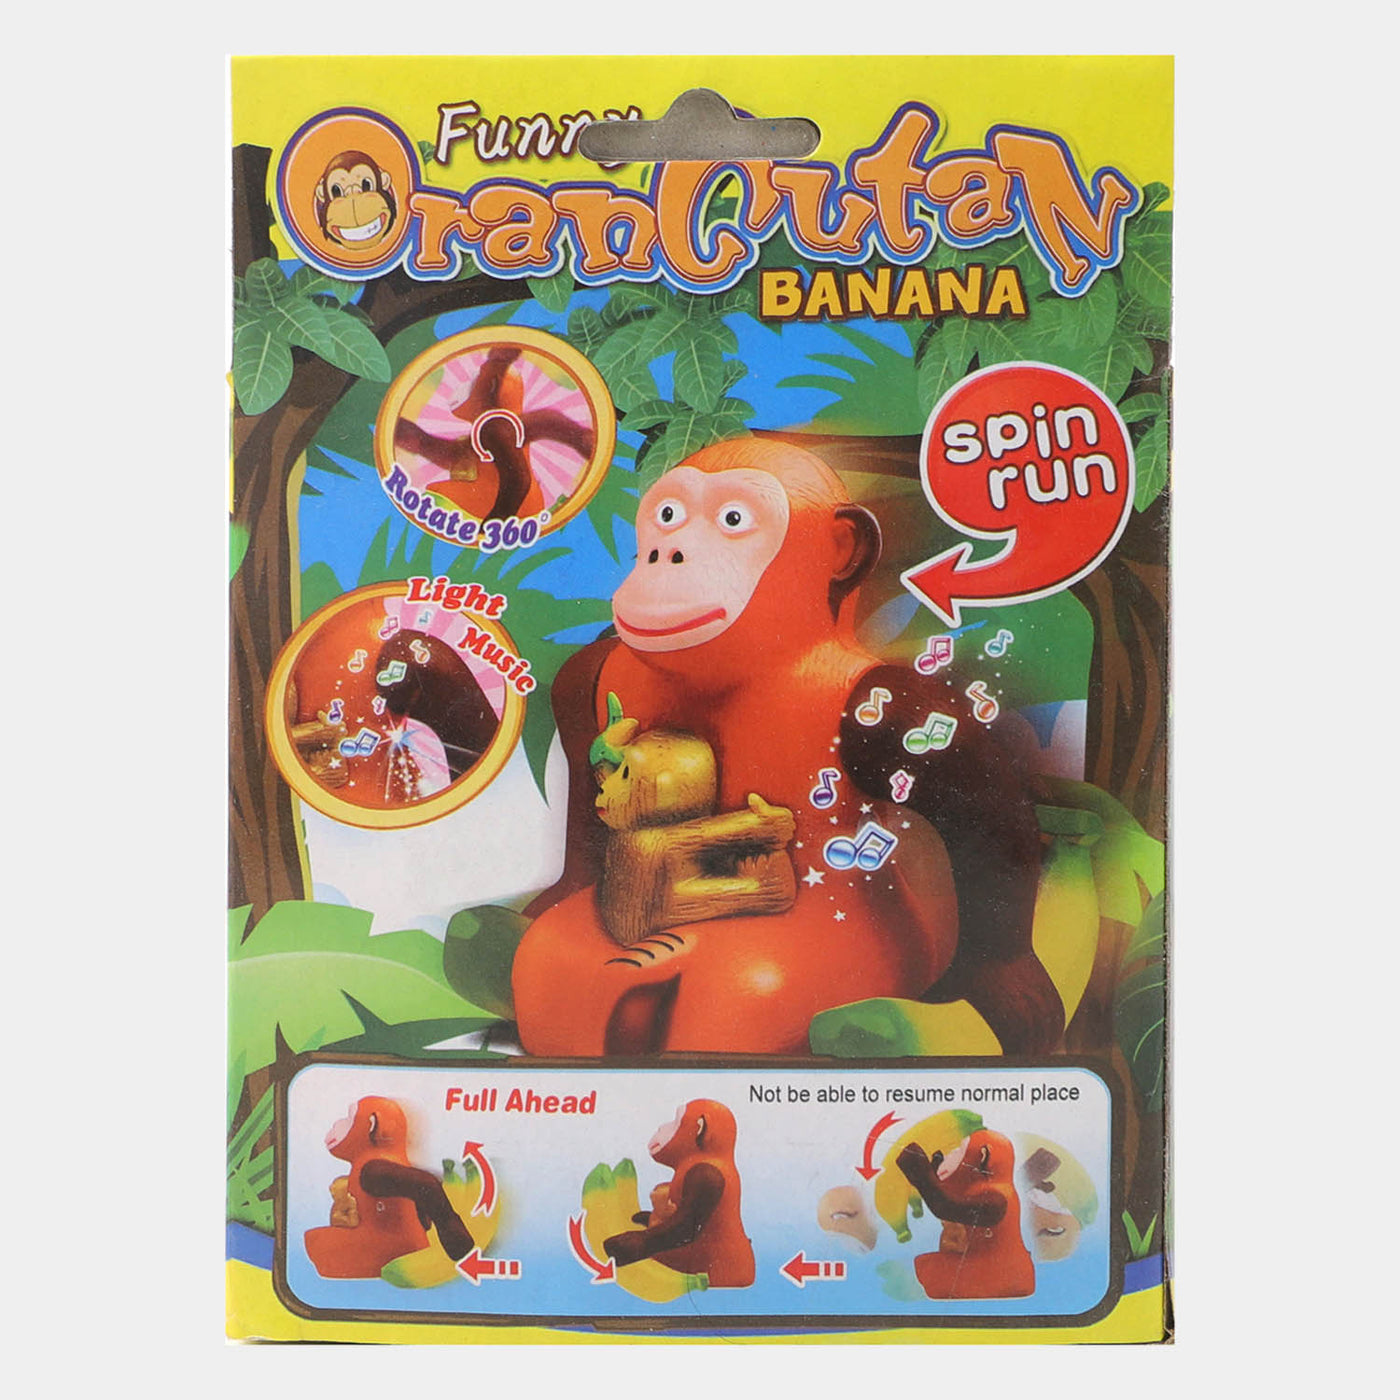 Monkey Light & Music Toy For Kids